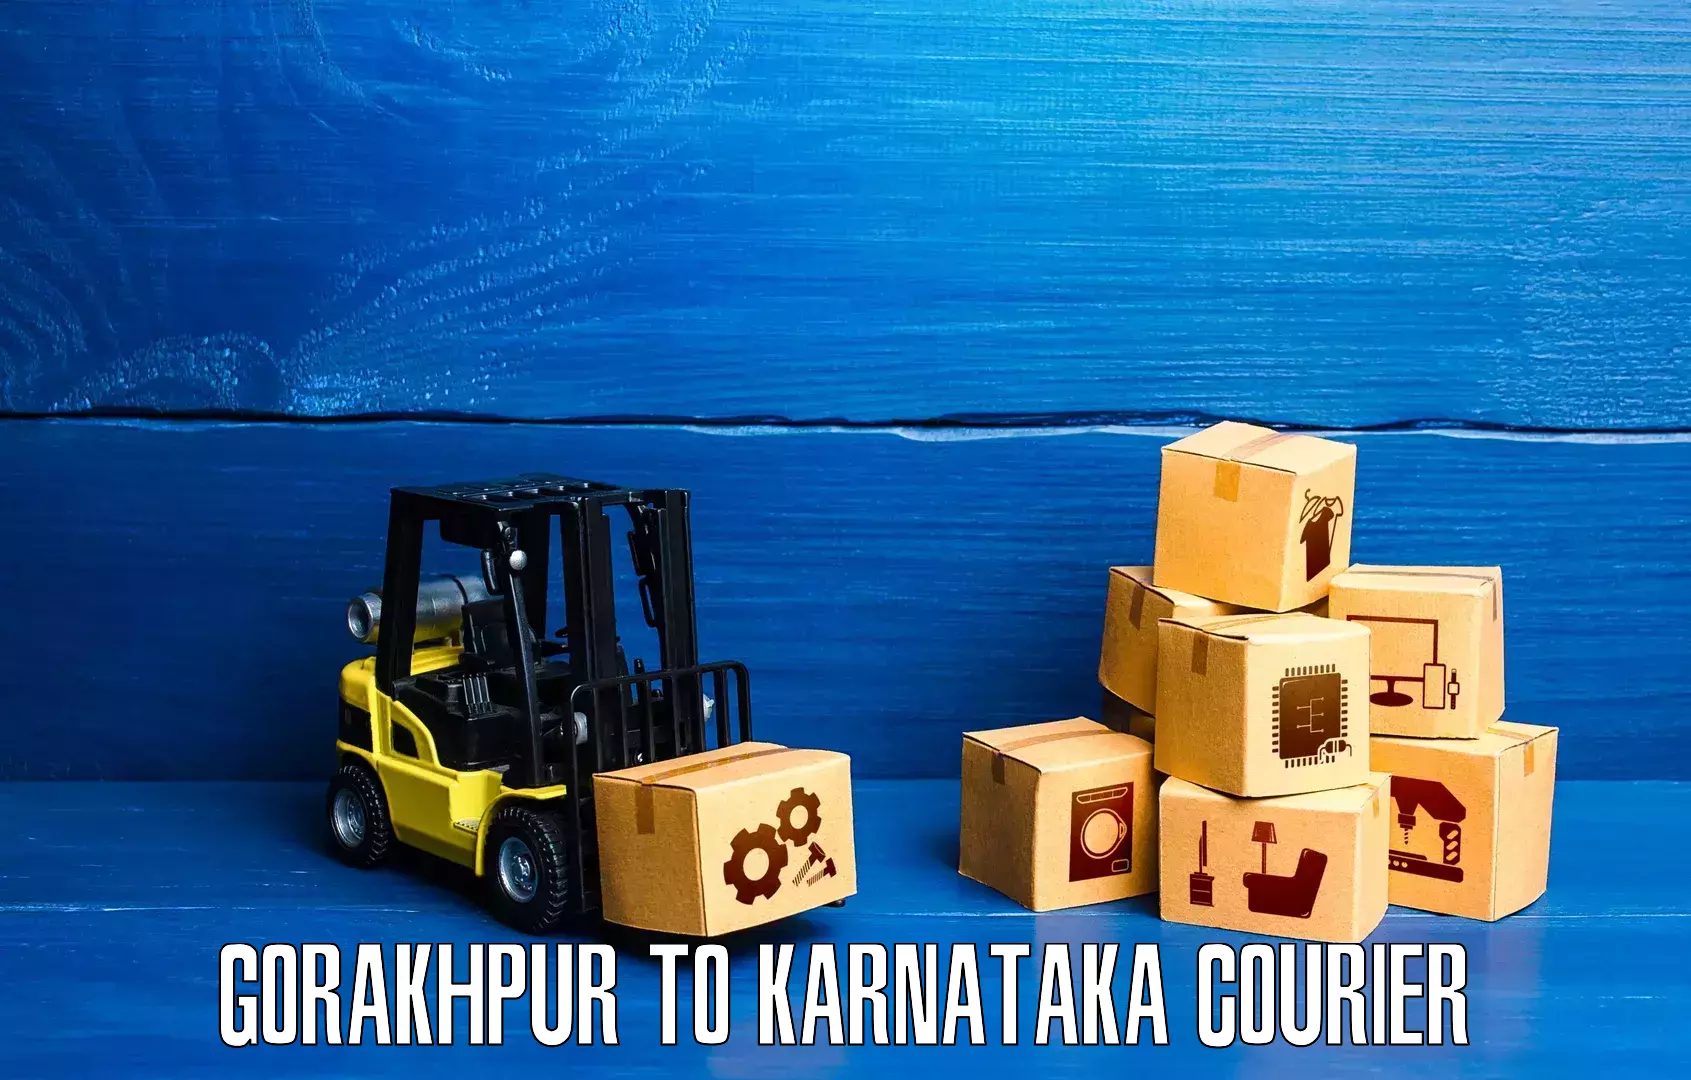 Global courier networks Gorakhpur to Karnataka